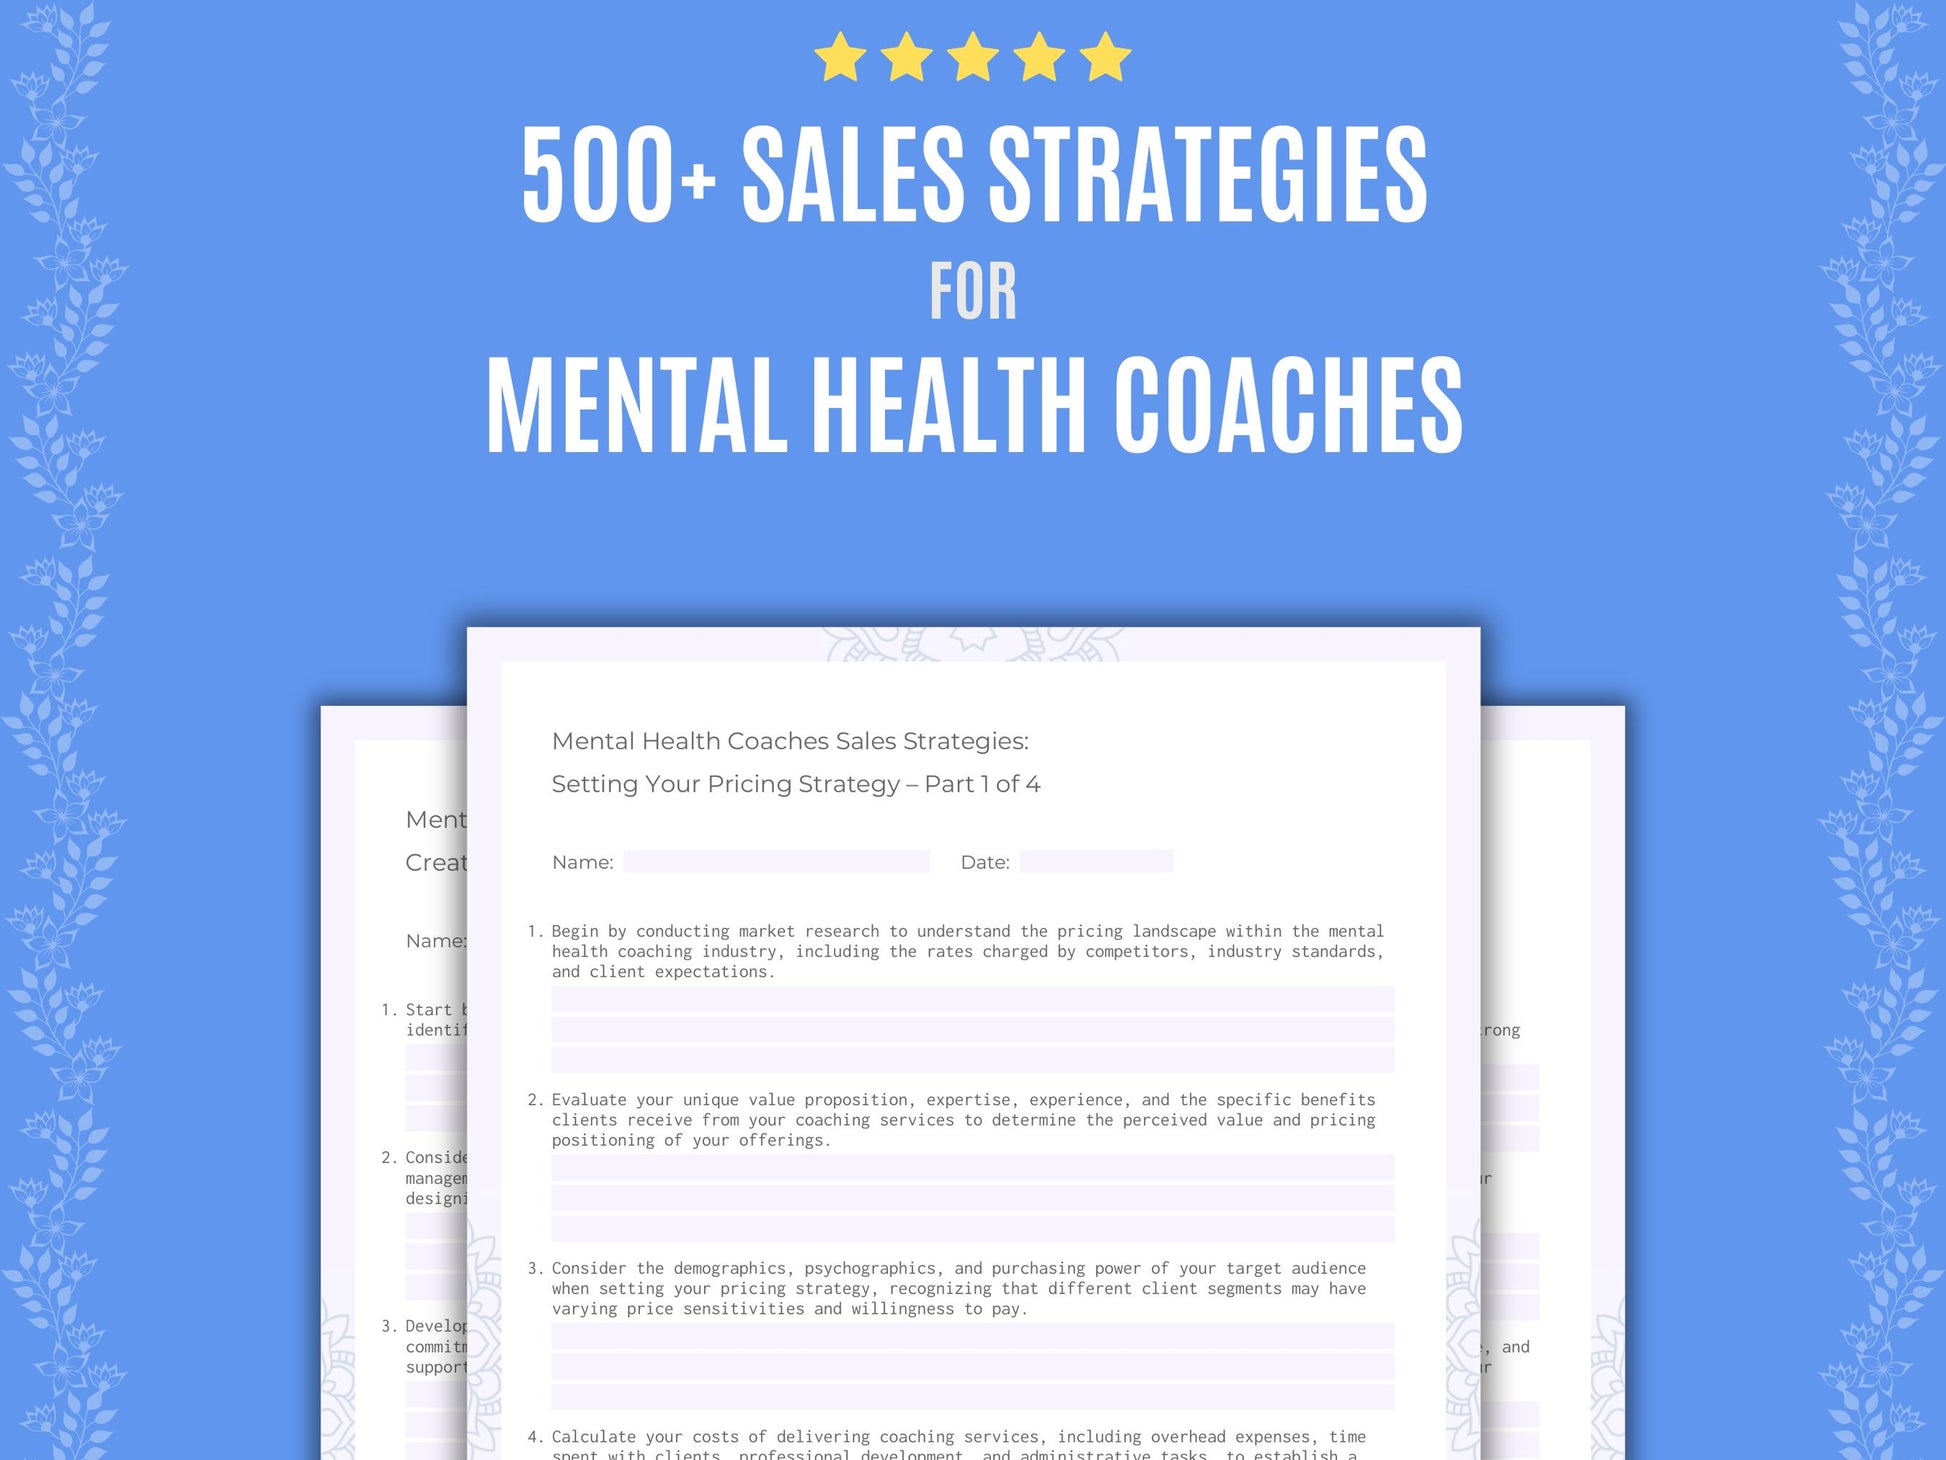 Mental Health Coaches Sales Strategies